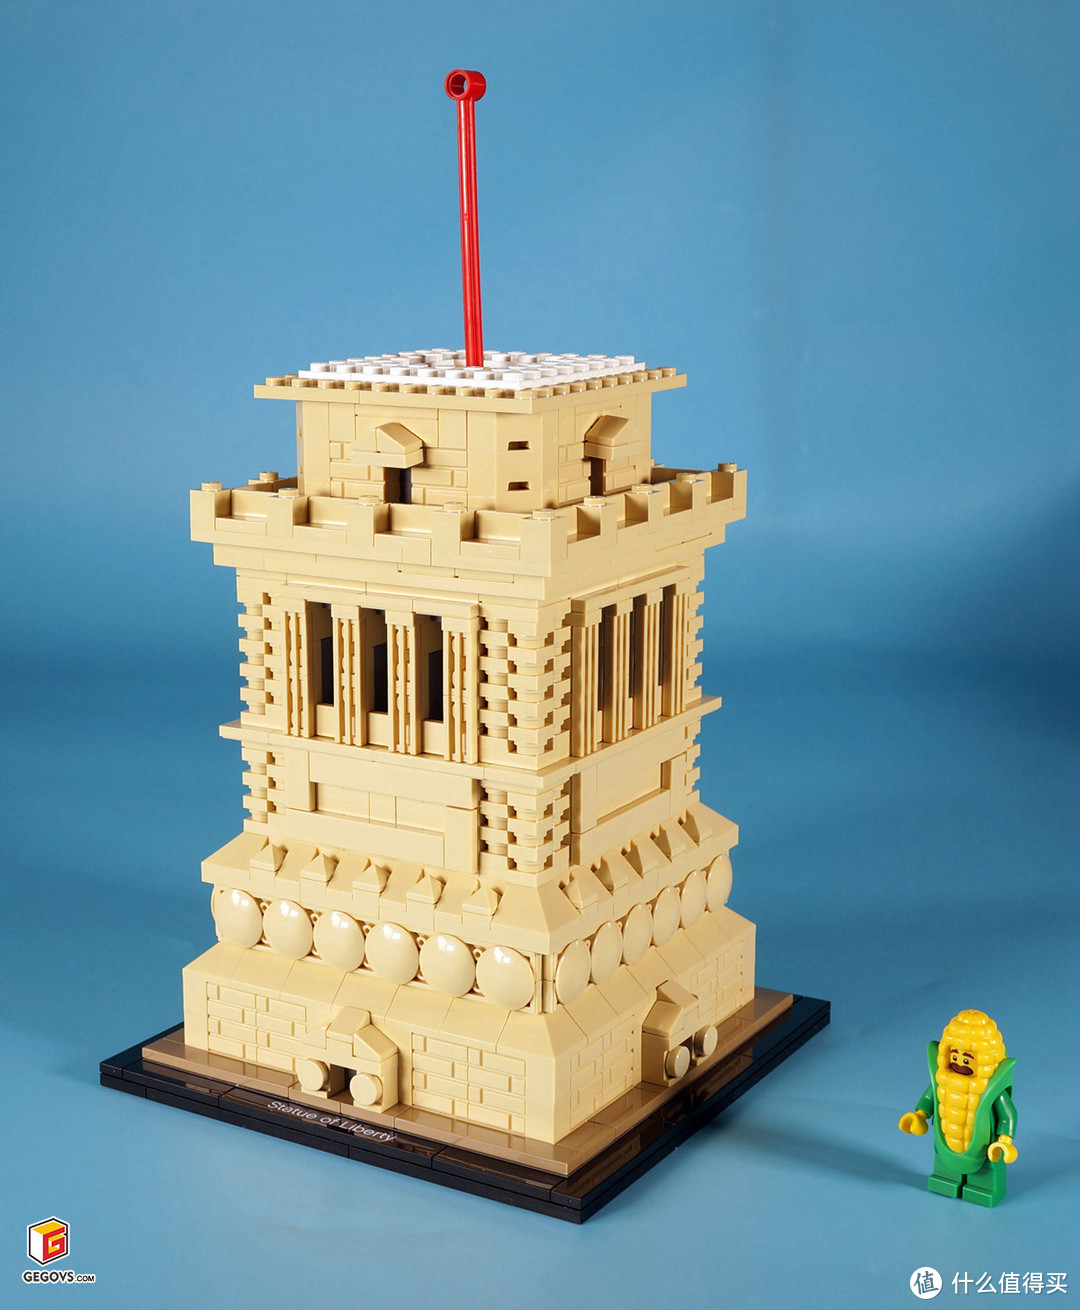 LEGO 21042 Statue of Liberty (自由女神像）开箱报告